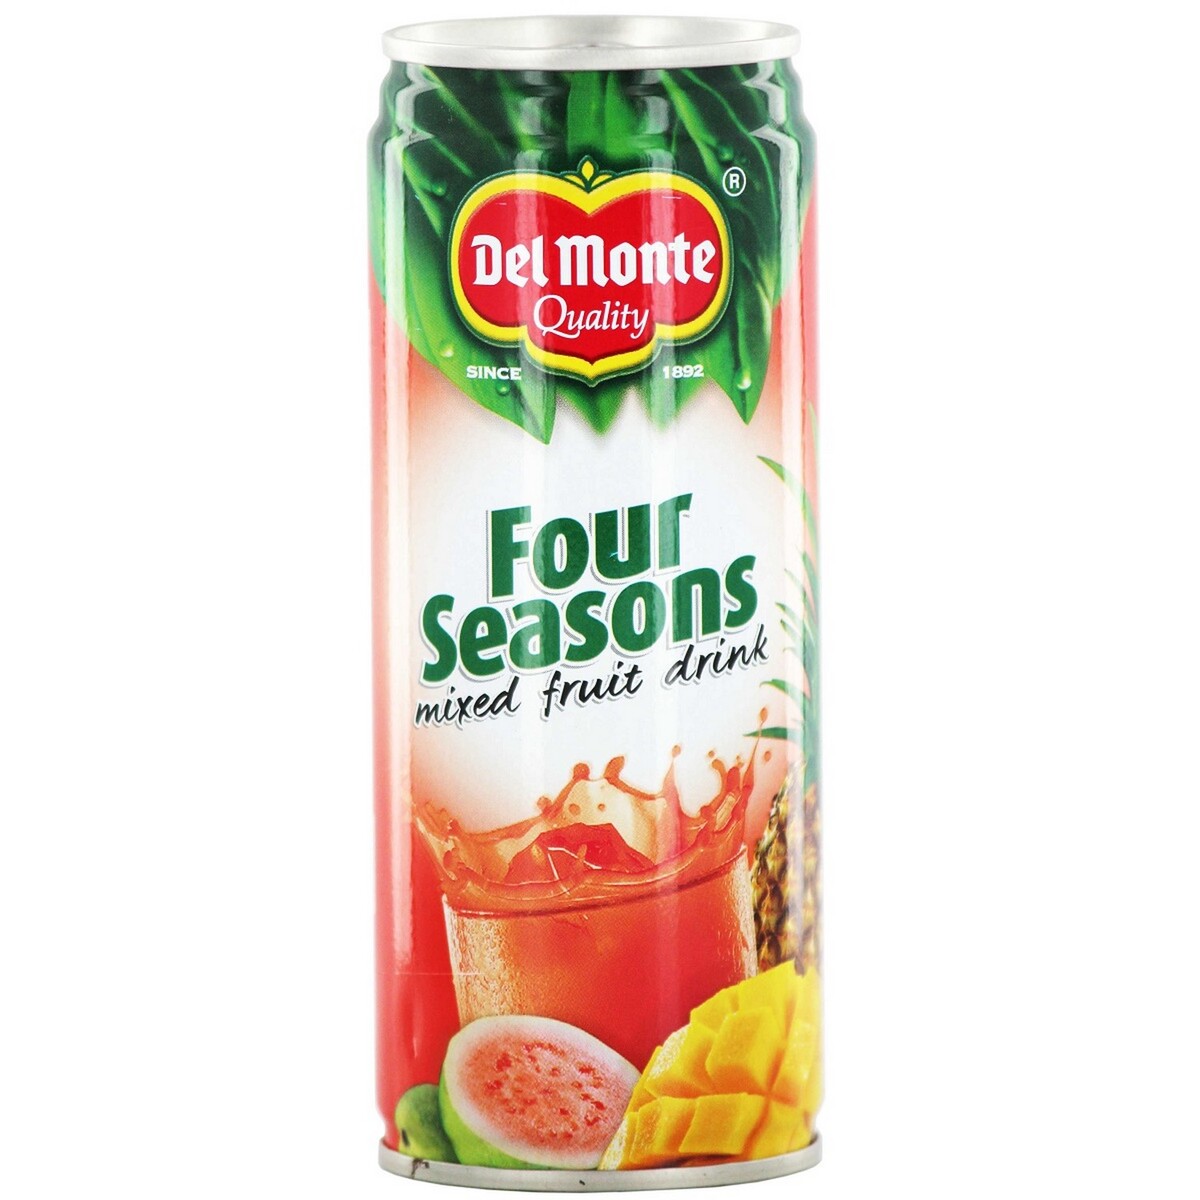 Delmonte Four Seasons Mixed Fruit Drink 240ml